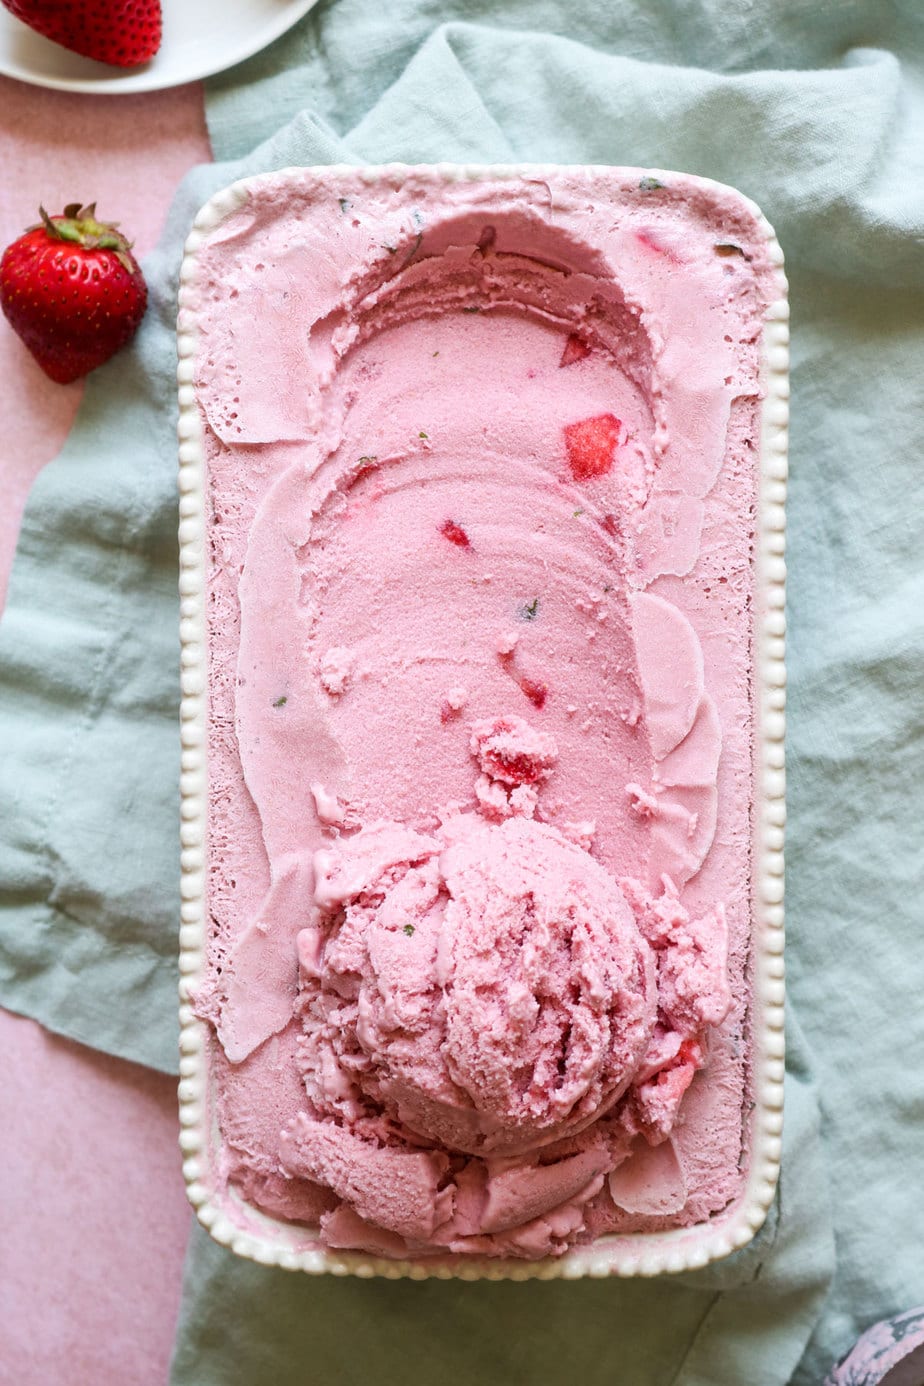 Strawberry Basil Ice Cream from Well Vegan - Vegan Strawberry Dessert Recipes